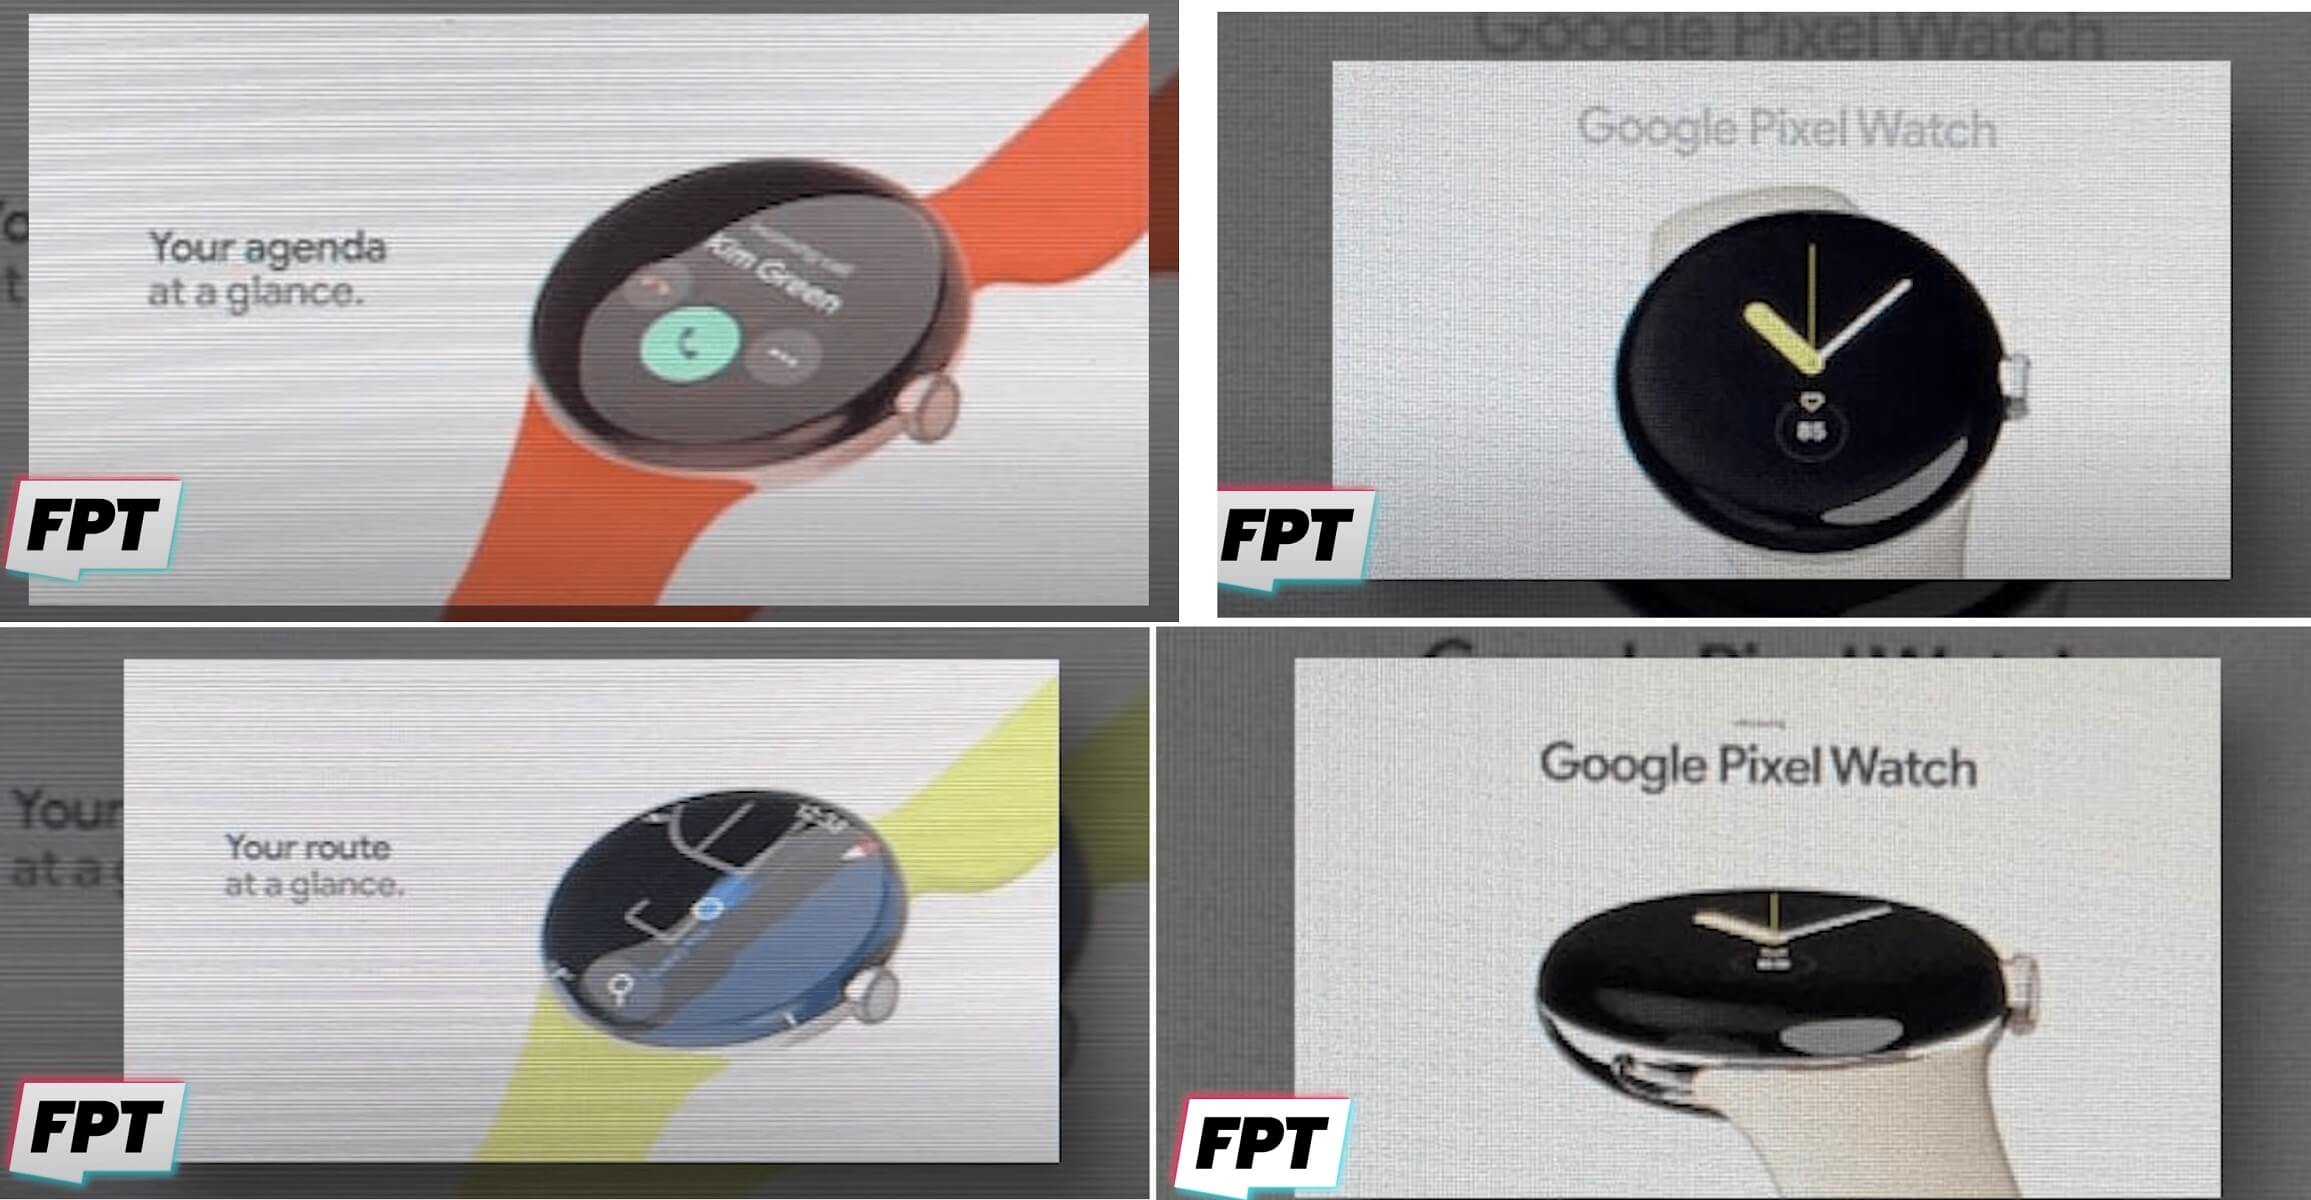 Google Pixel Watch Market images